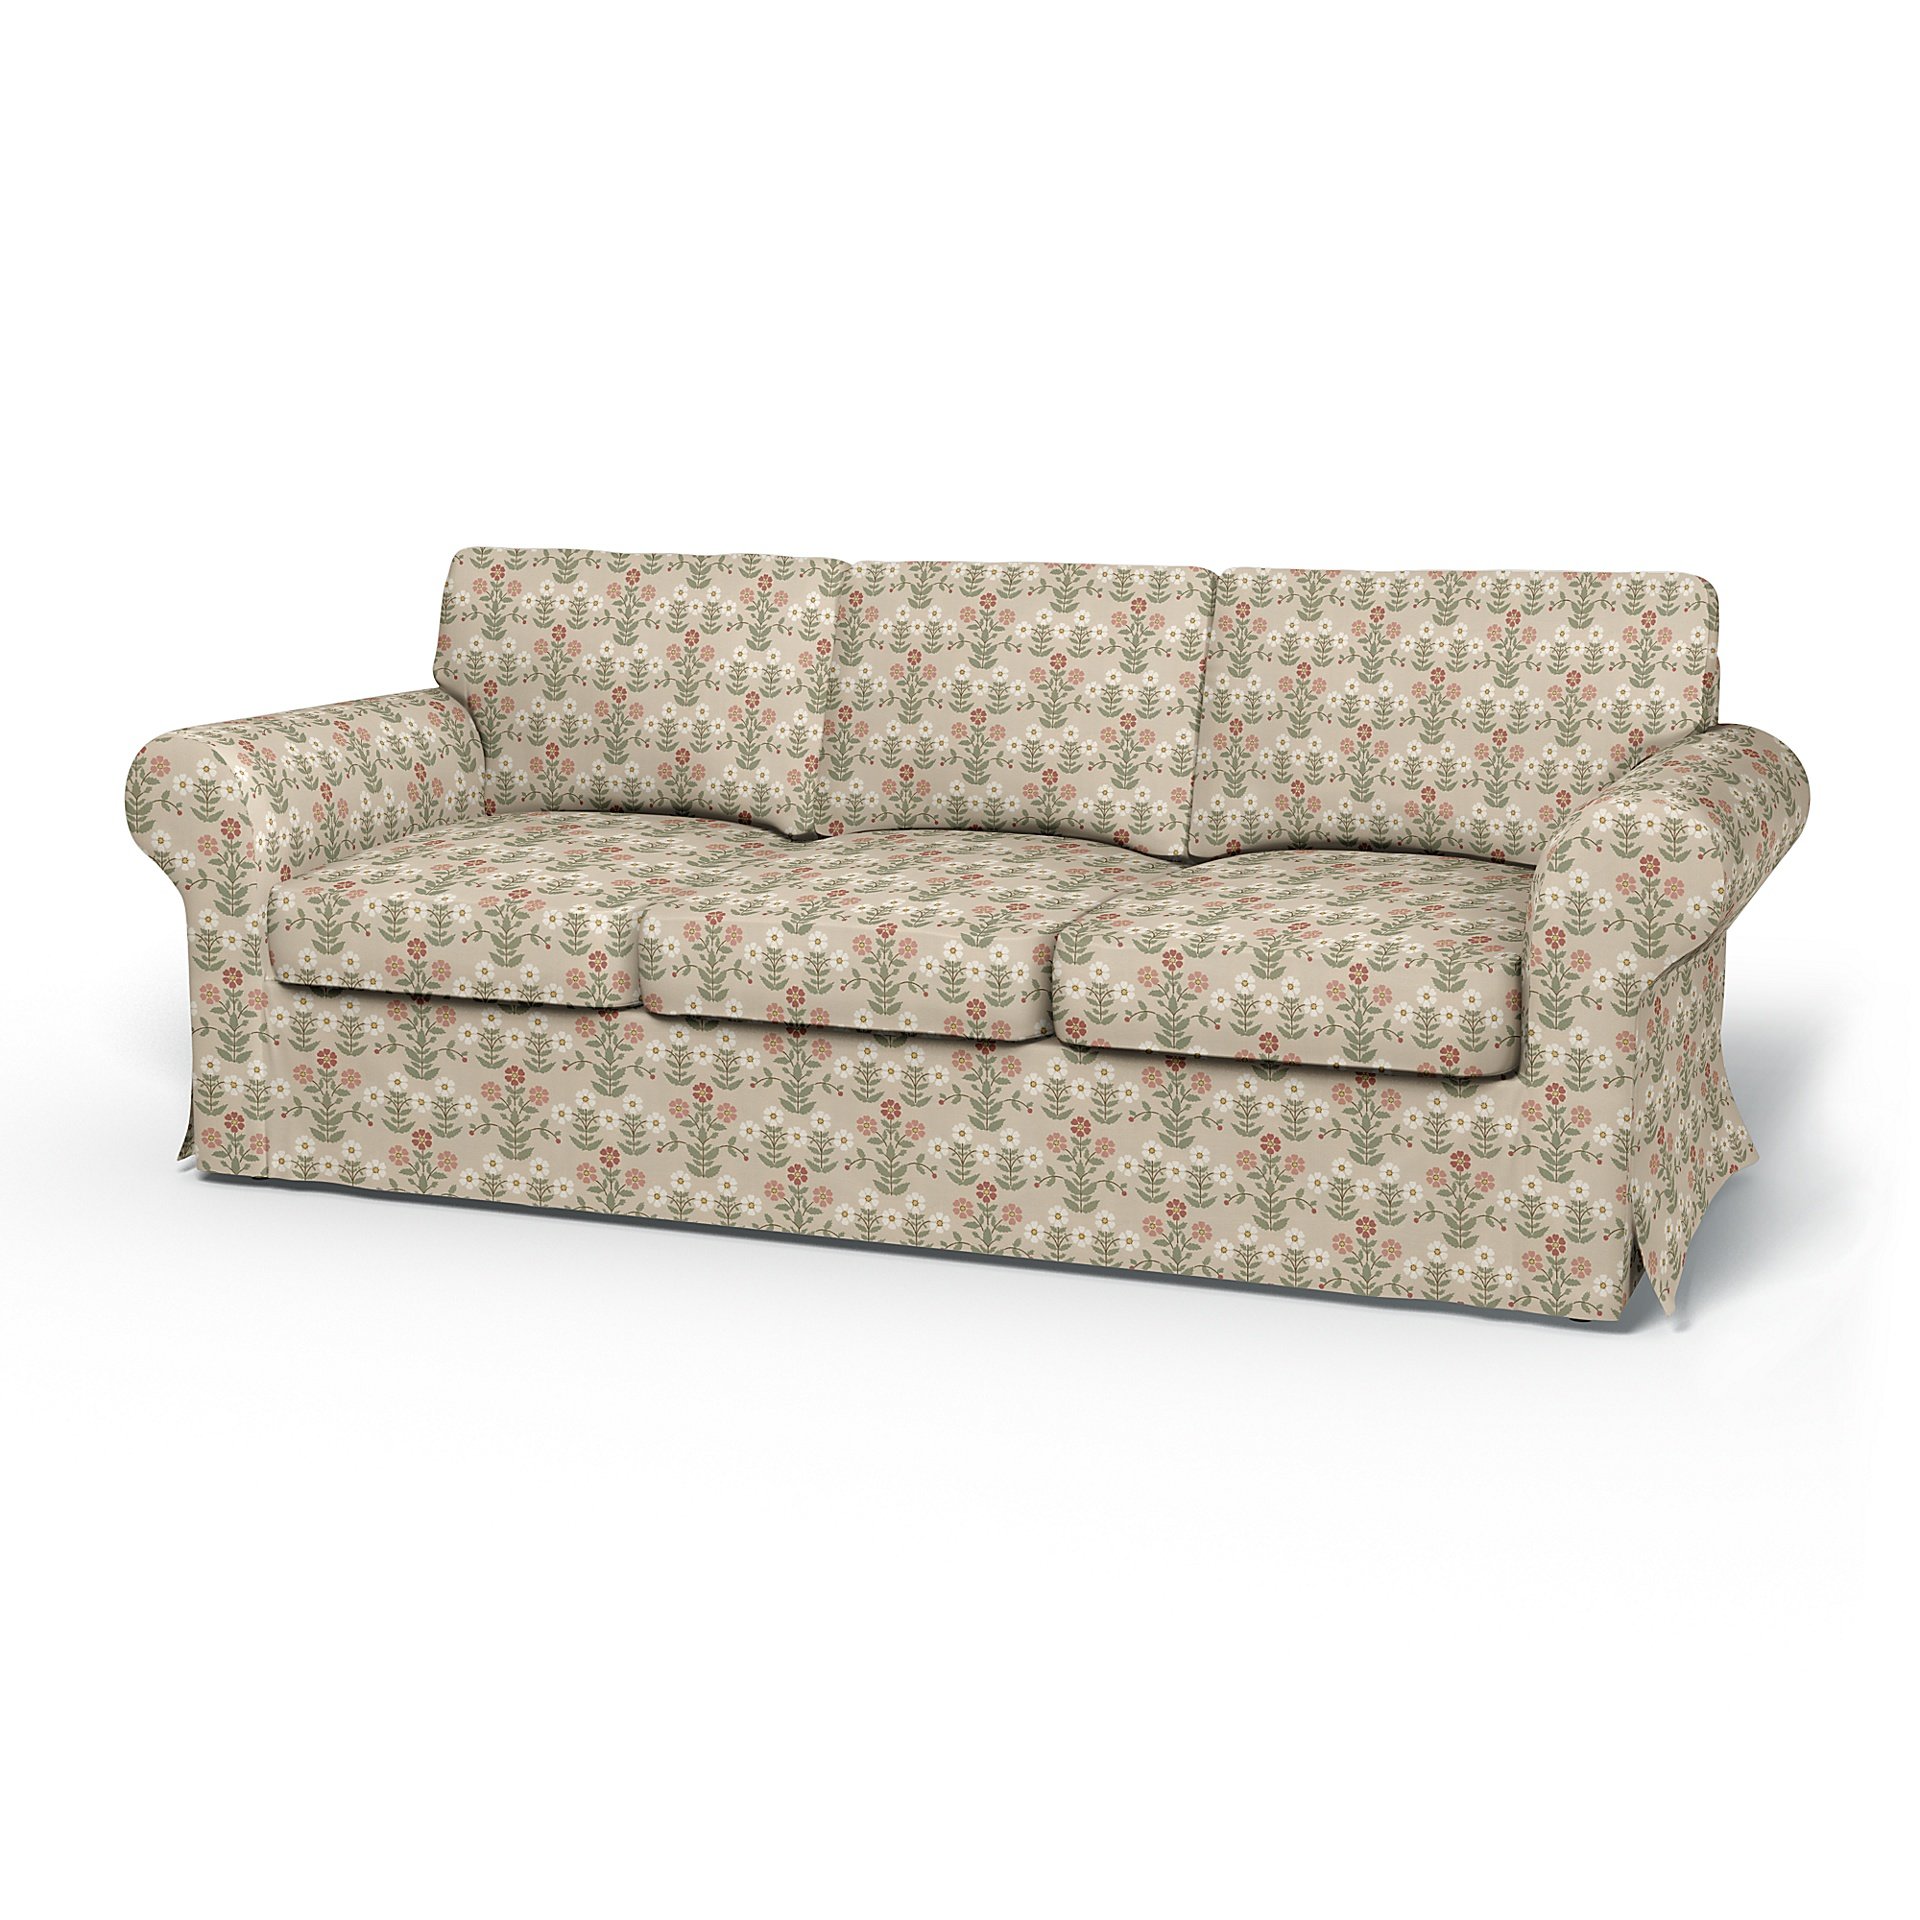 IKEA - Ektorp 3 Seater Sofa Bed Cover, Pink Sippor, BEMZ x BORASTAPETER COLLECTION - Bemz